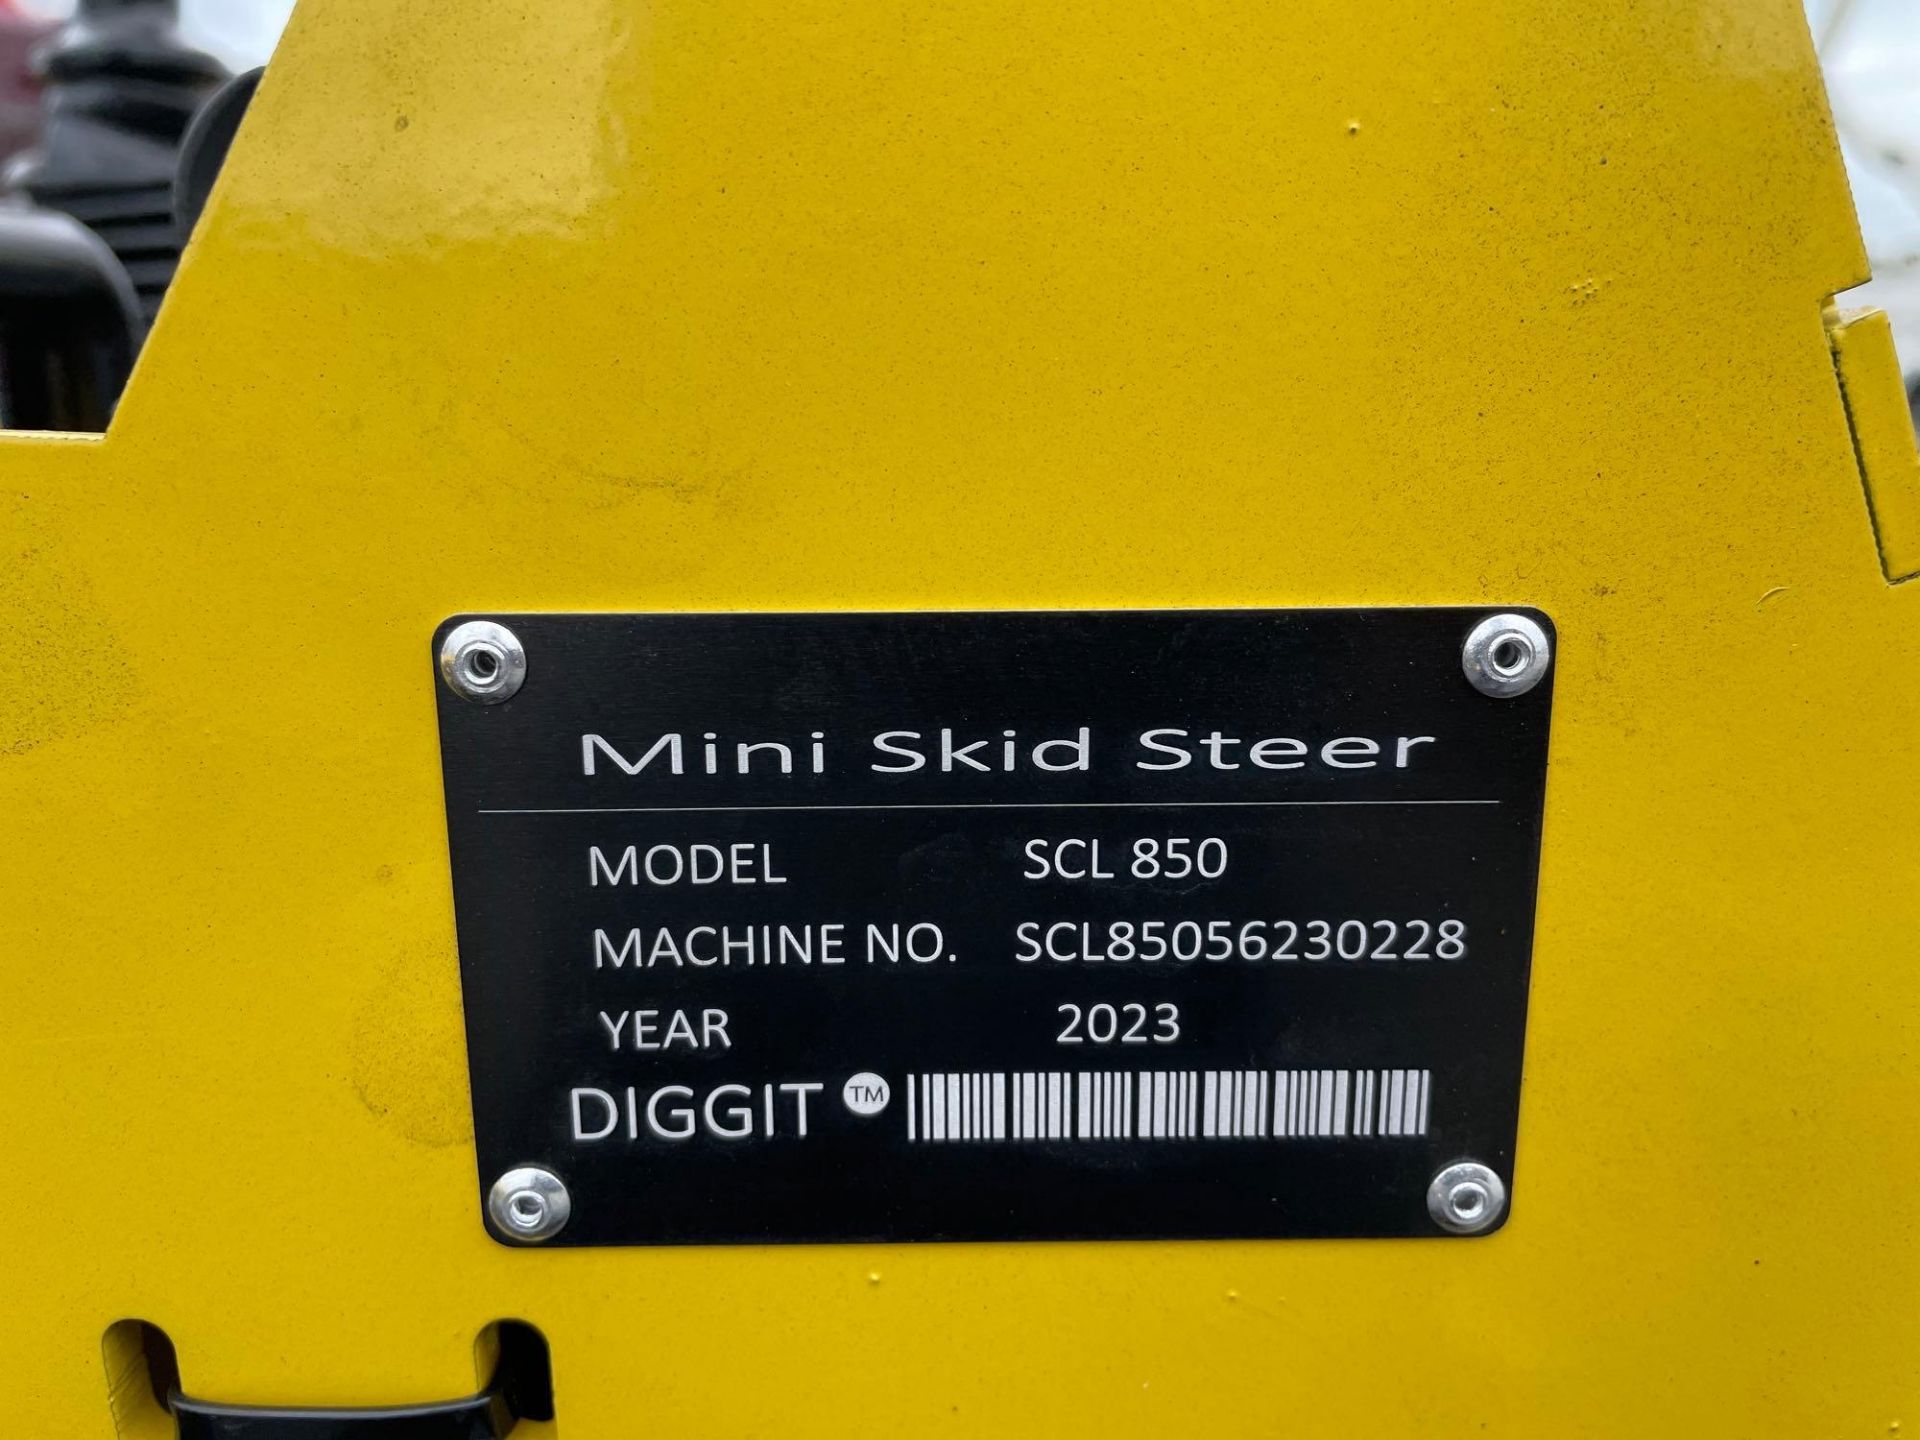 Diggit SCL850 Mini Skid Steer Loader - Image 5 of 11